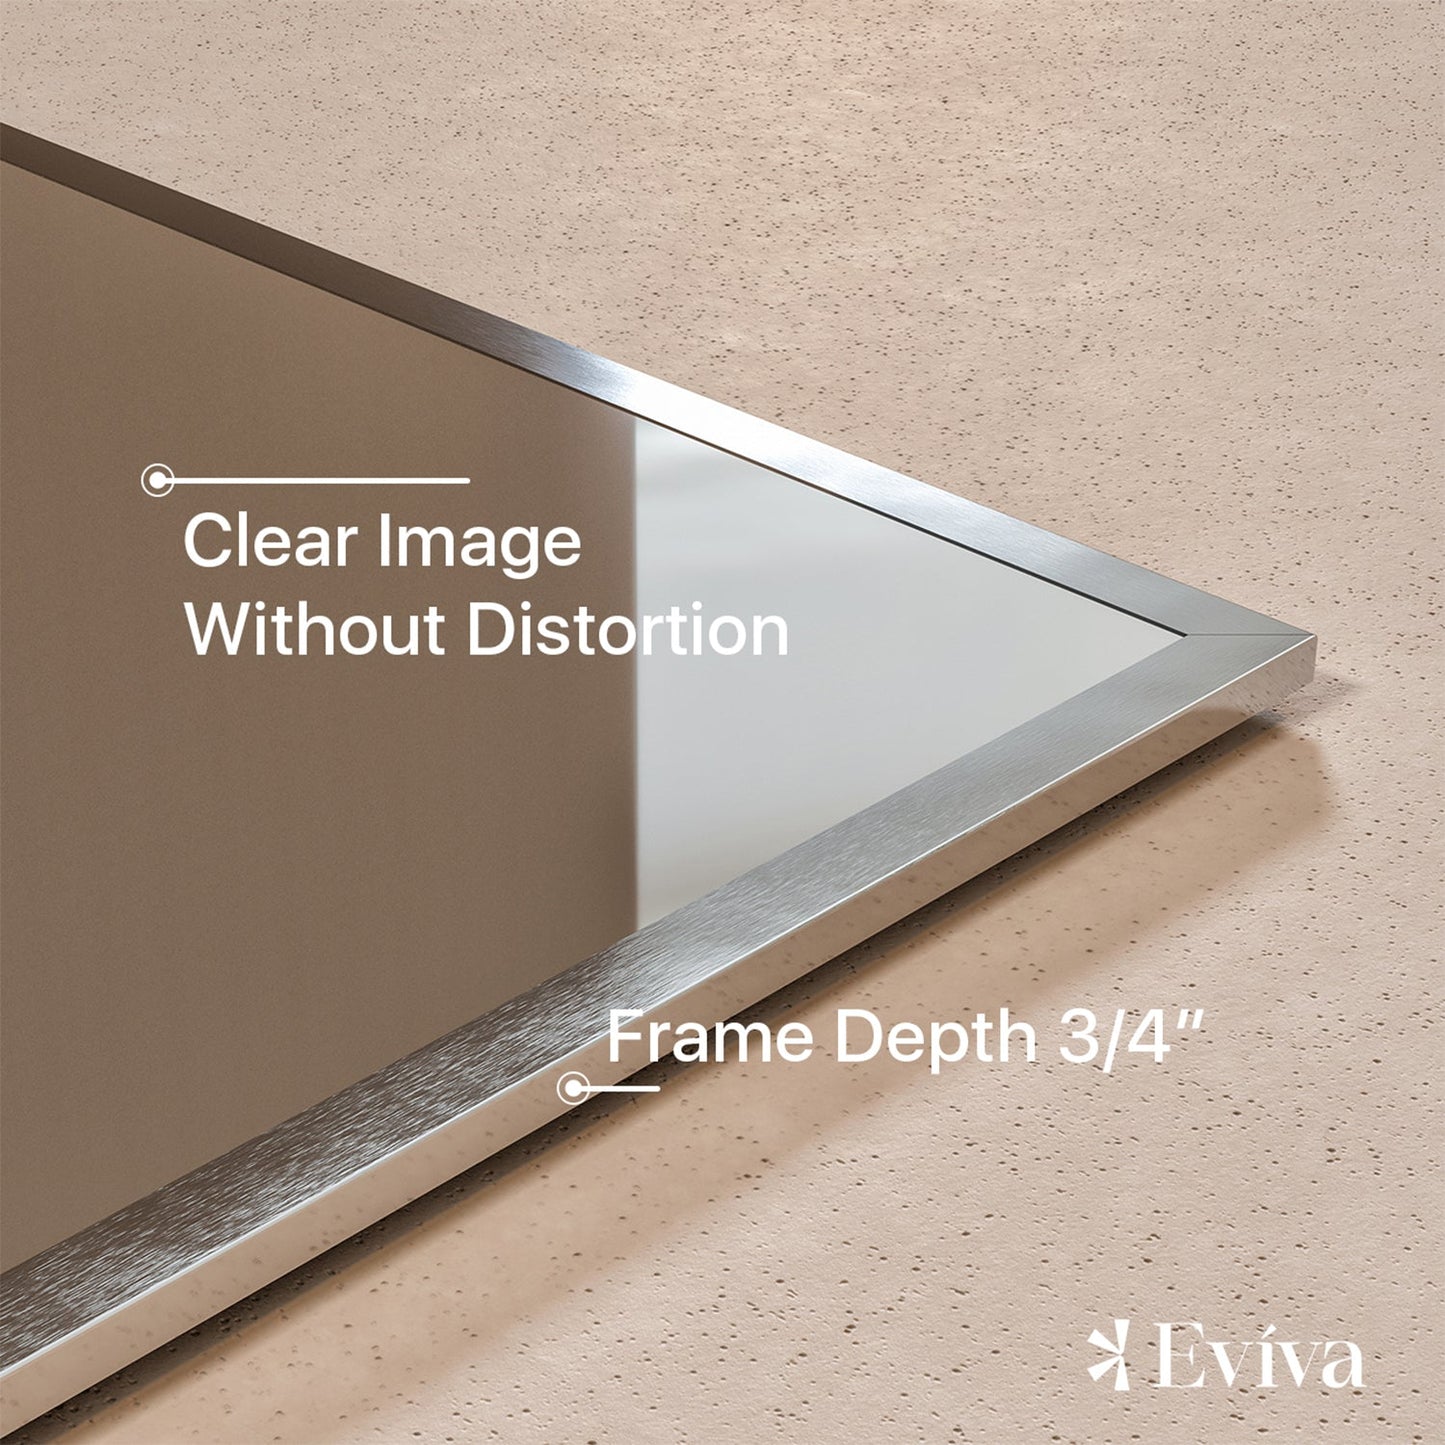 Eviva Sax 24 in. Polished Chrome Framed Bathroom Wall Mirror